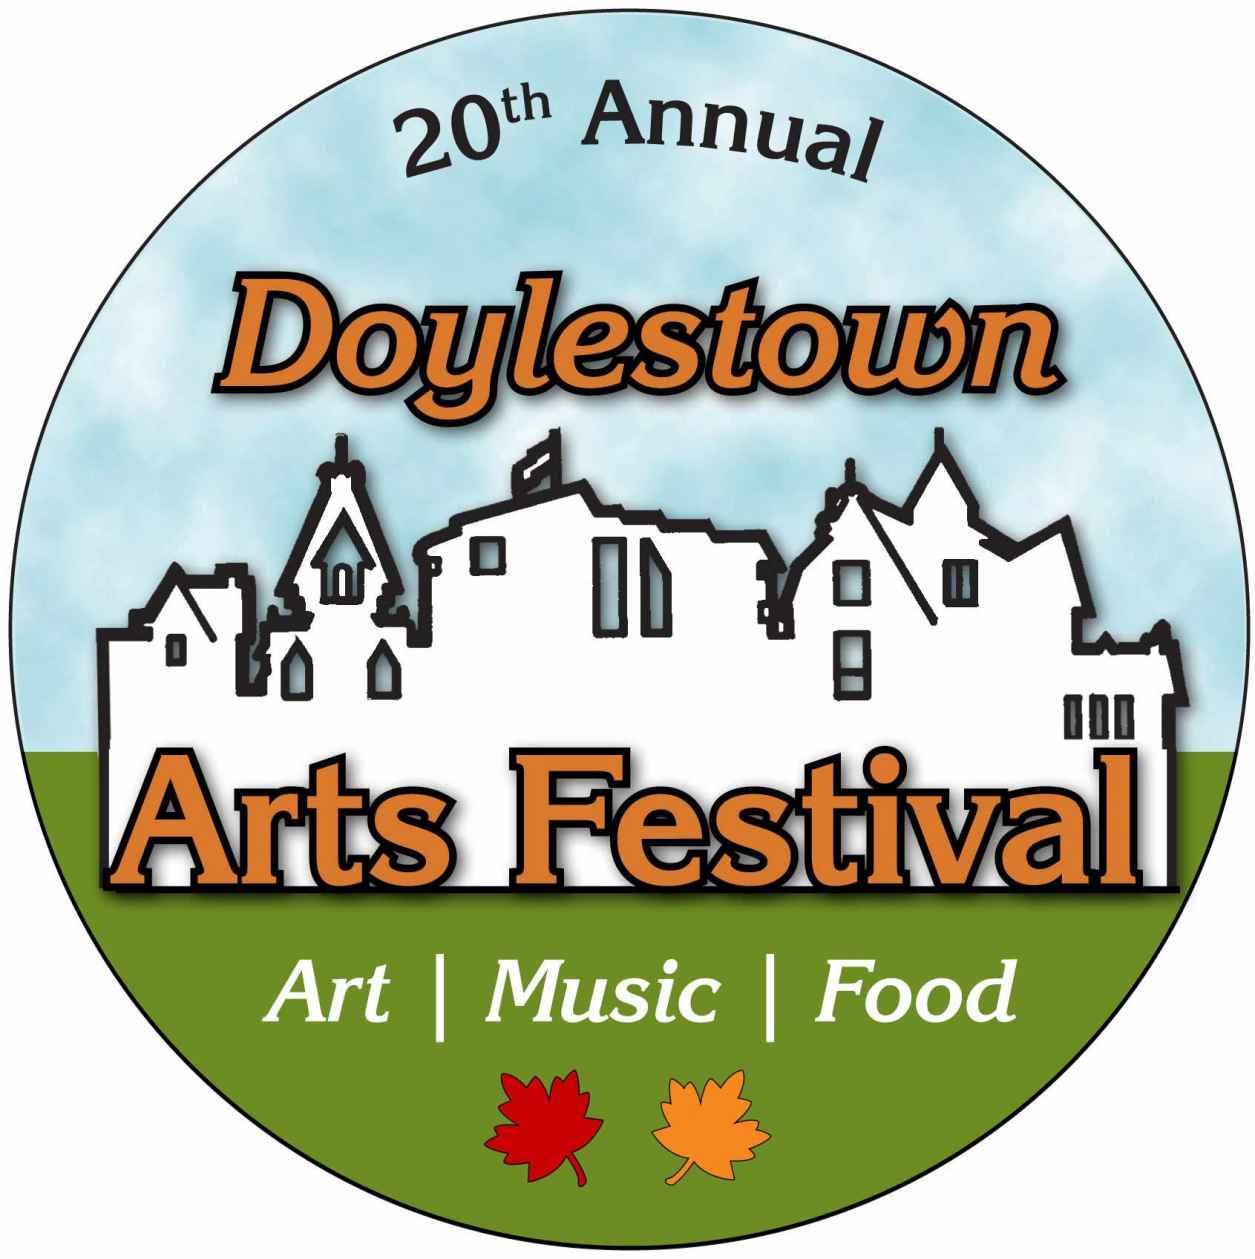 Doylestown Arts Festival Celebrates 20th Anniversary The Thompson